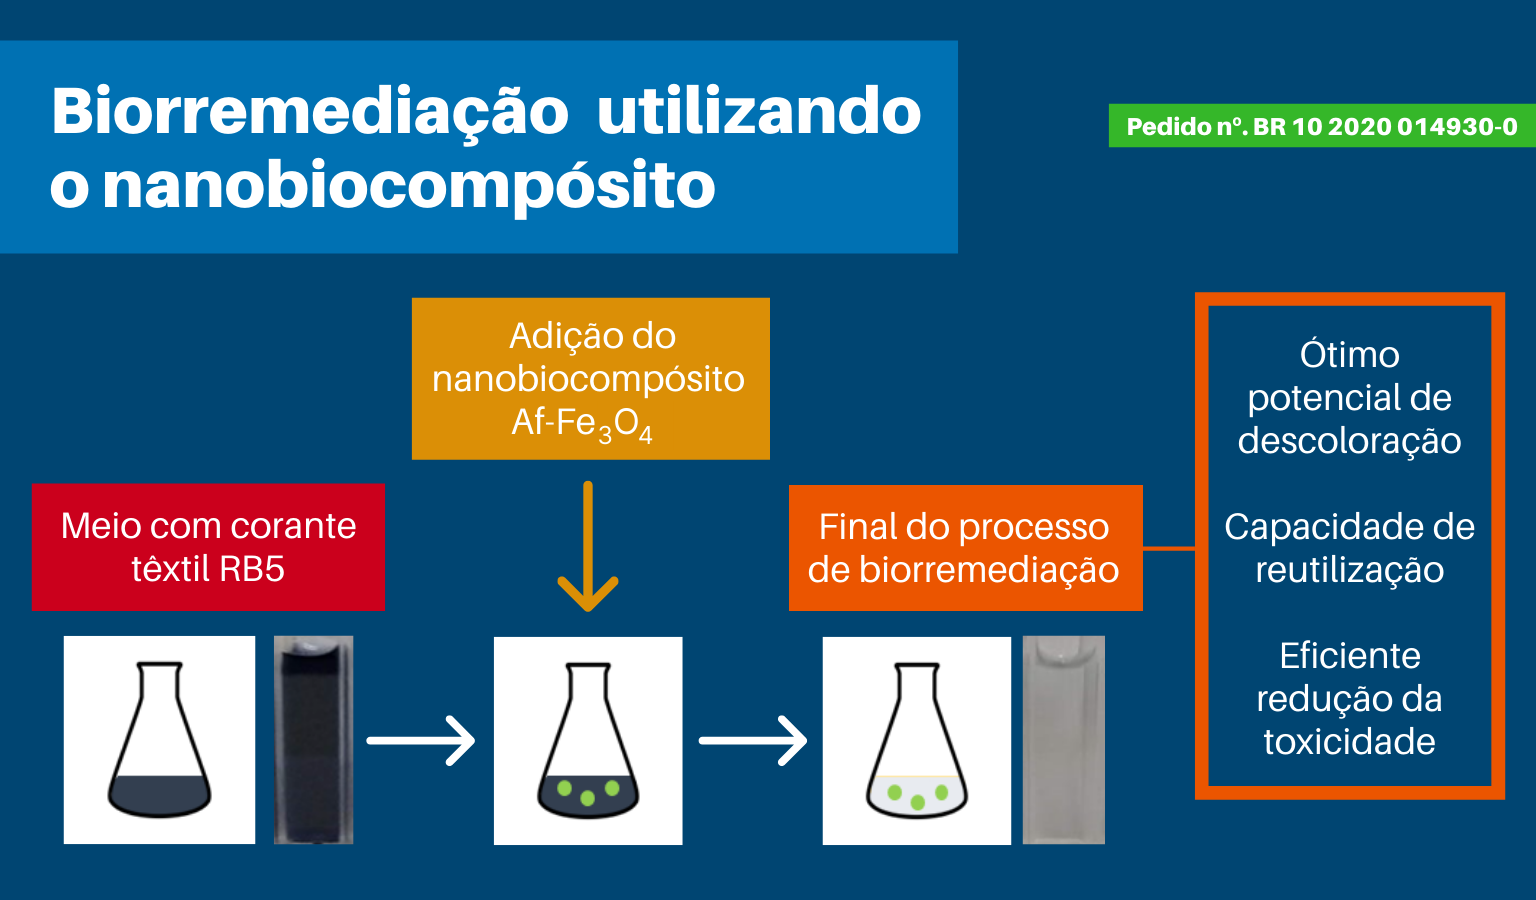 biorremediacao-utilizando-nbc-andressa-1